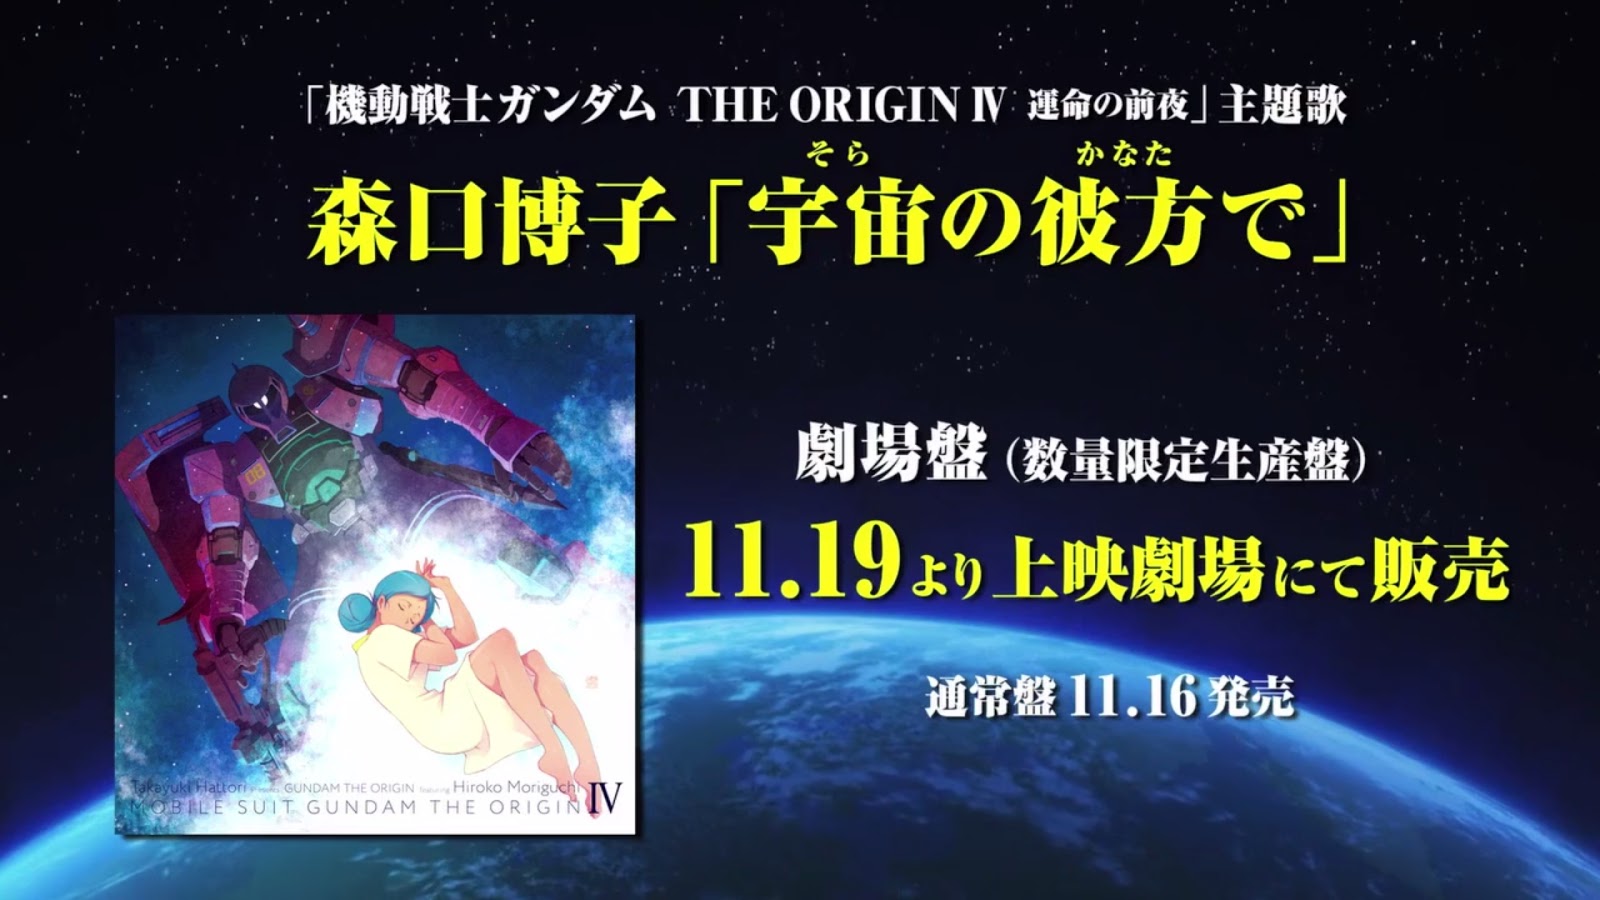 Mobile Suit Gundam The Origin IV Battle Action PV + Theme Song